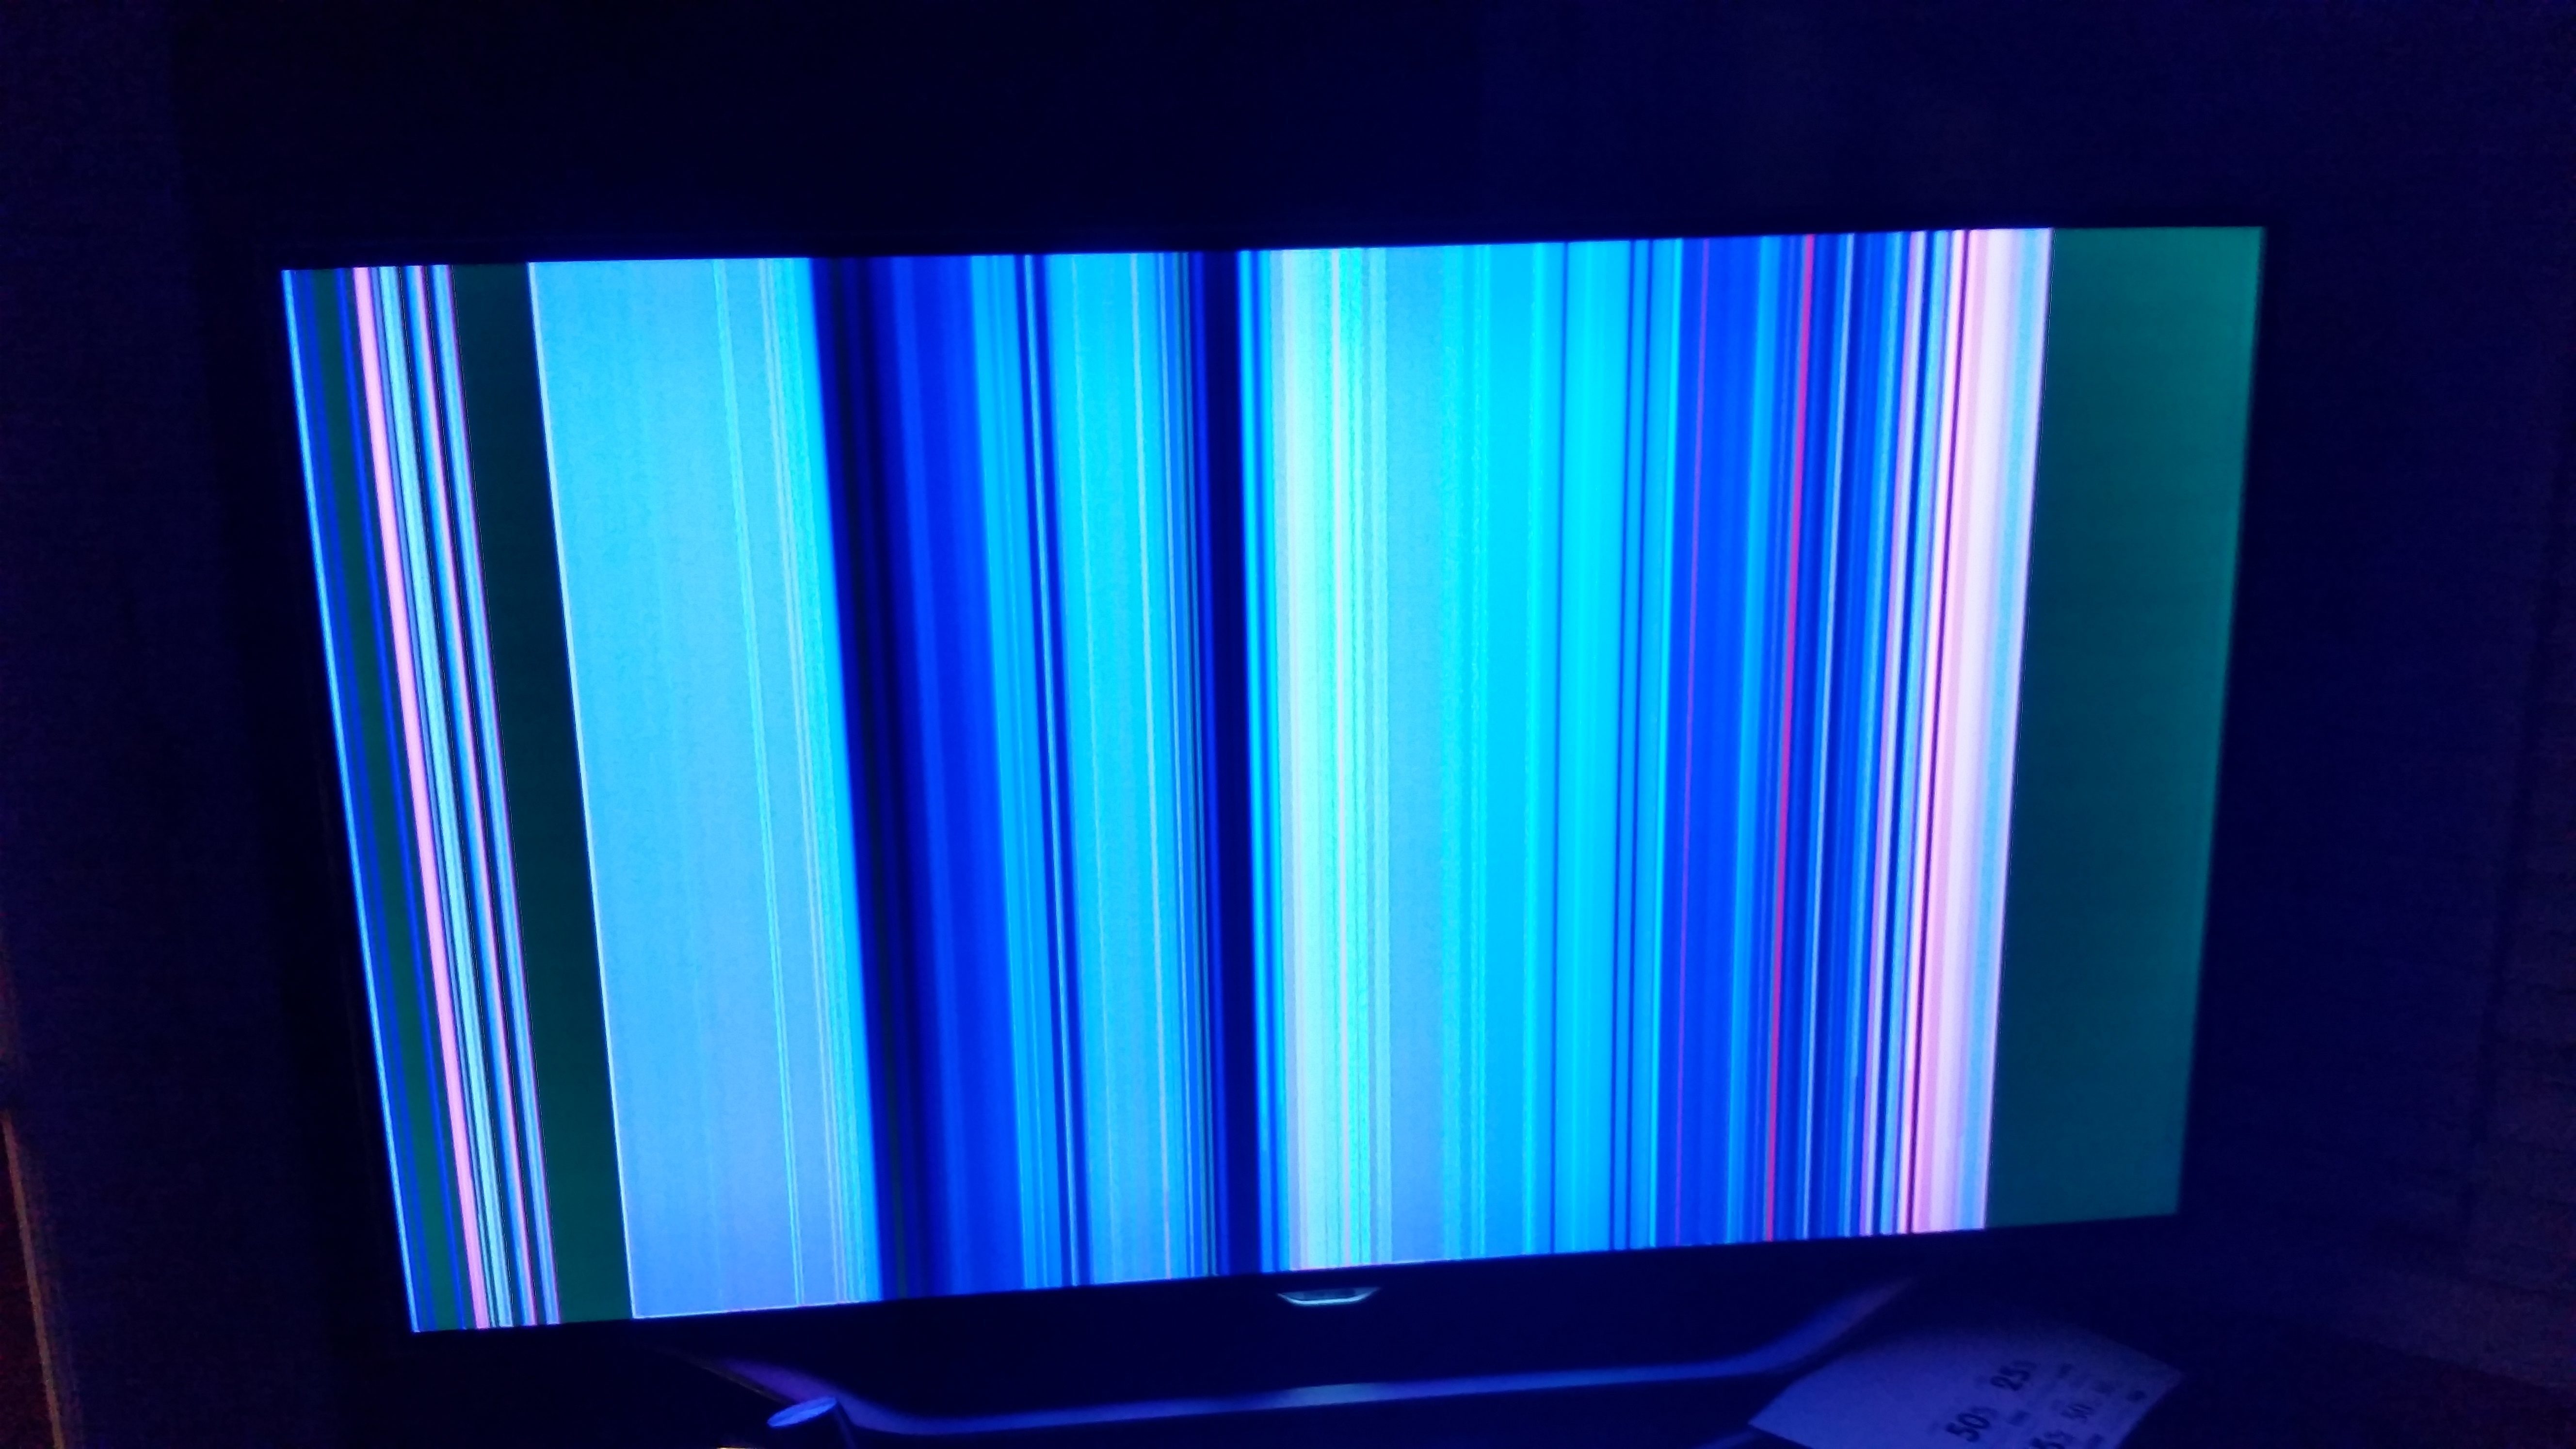 Жк телевизор полосы на экране. Телевизор Филипс горизонтальные полосы на экране. Вертикальные полосы на телевизоре. Экран телевизора. Полосымеа экране телевизора.